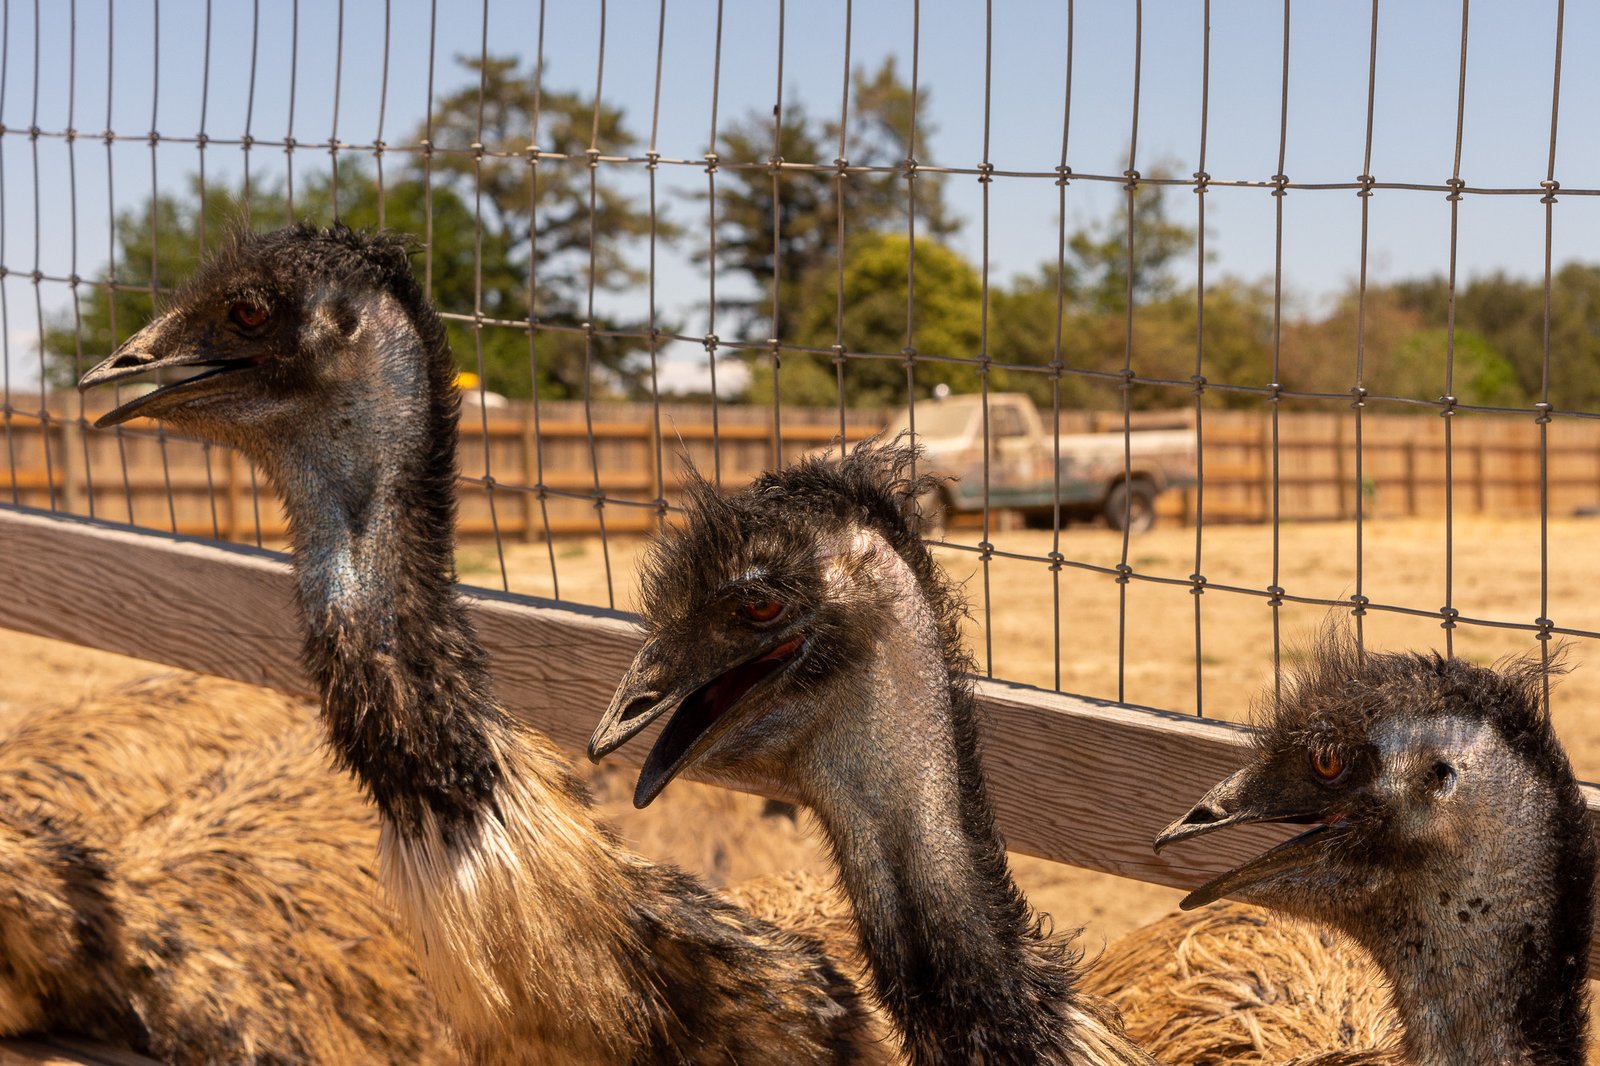 The emu gang at Ostrichland